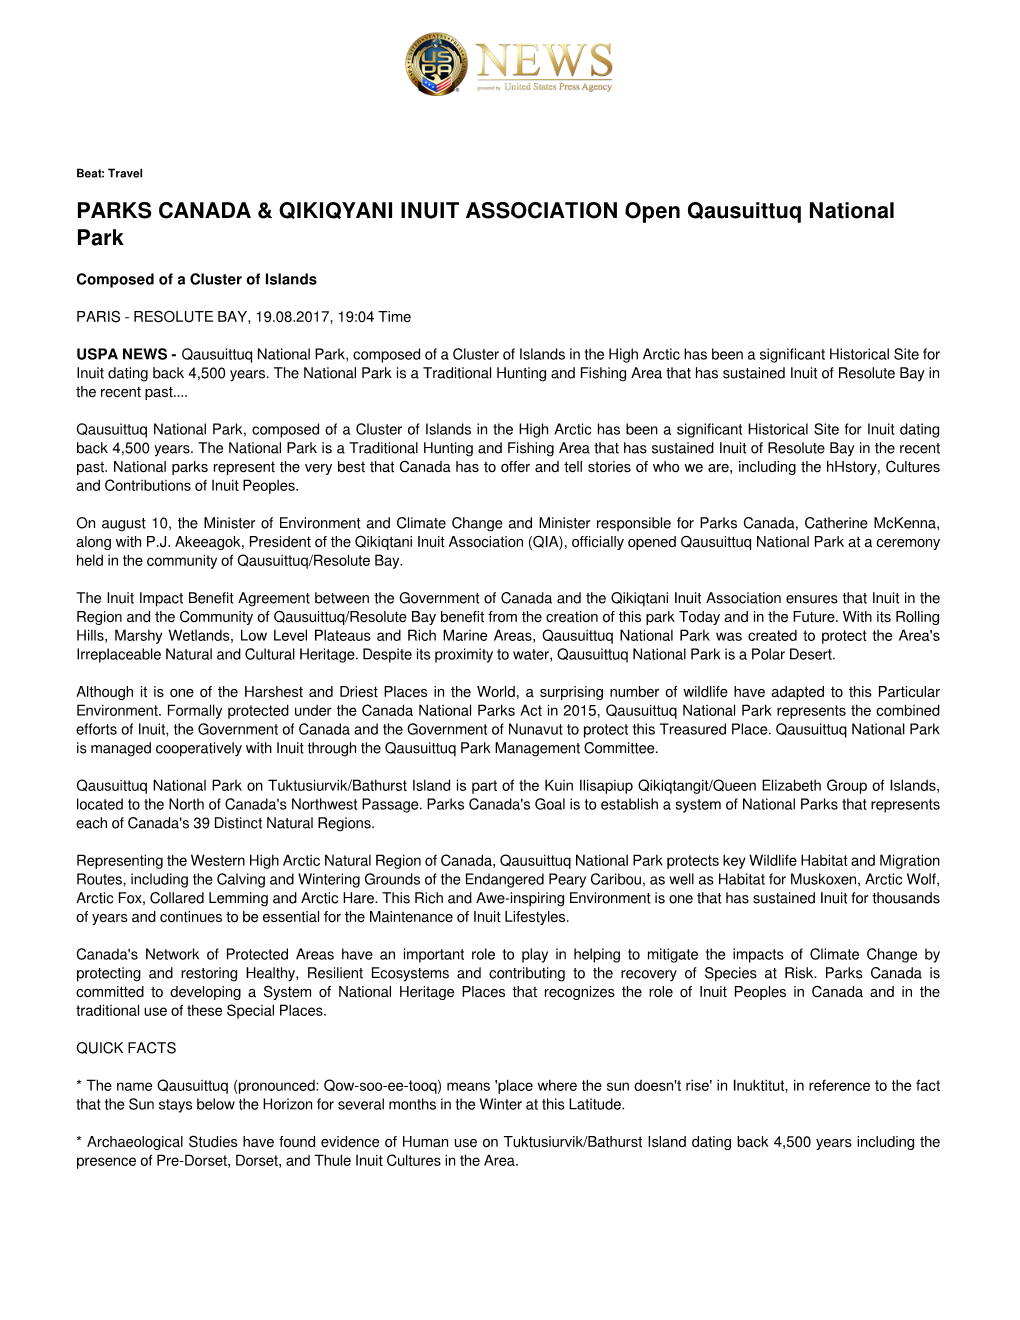 Parks Canada & Qikiqyani Inuit Association